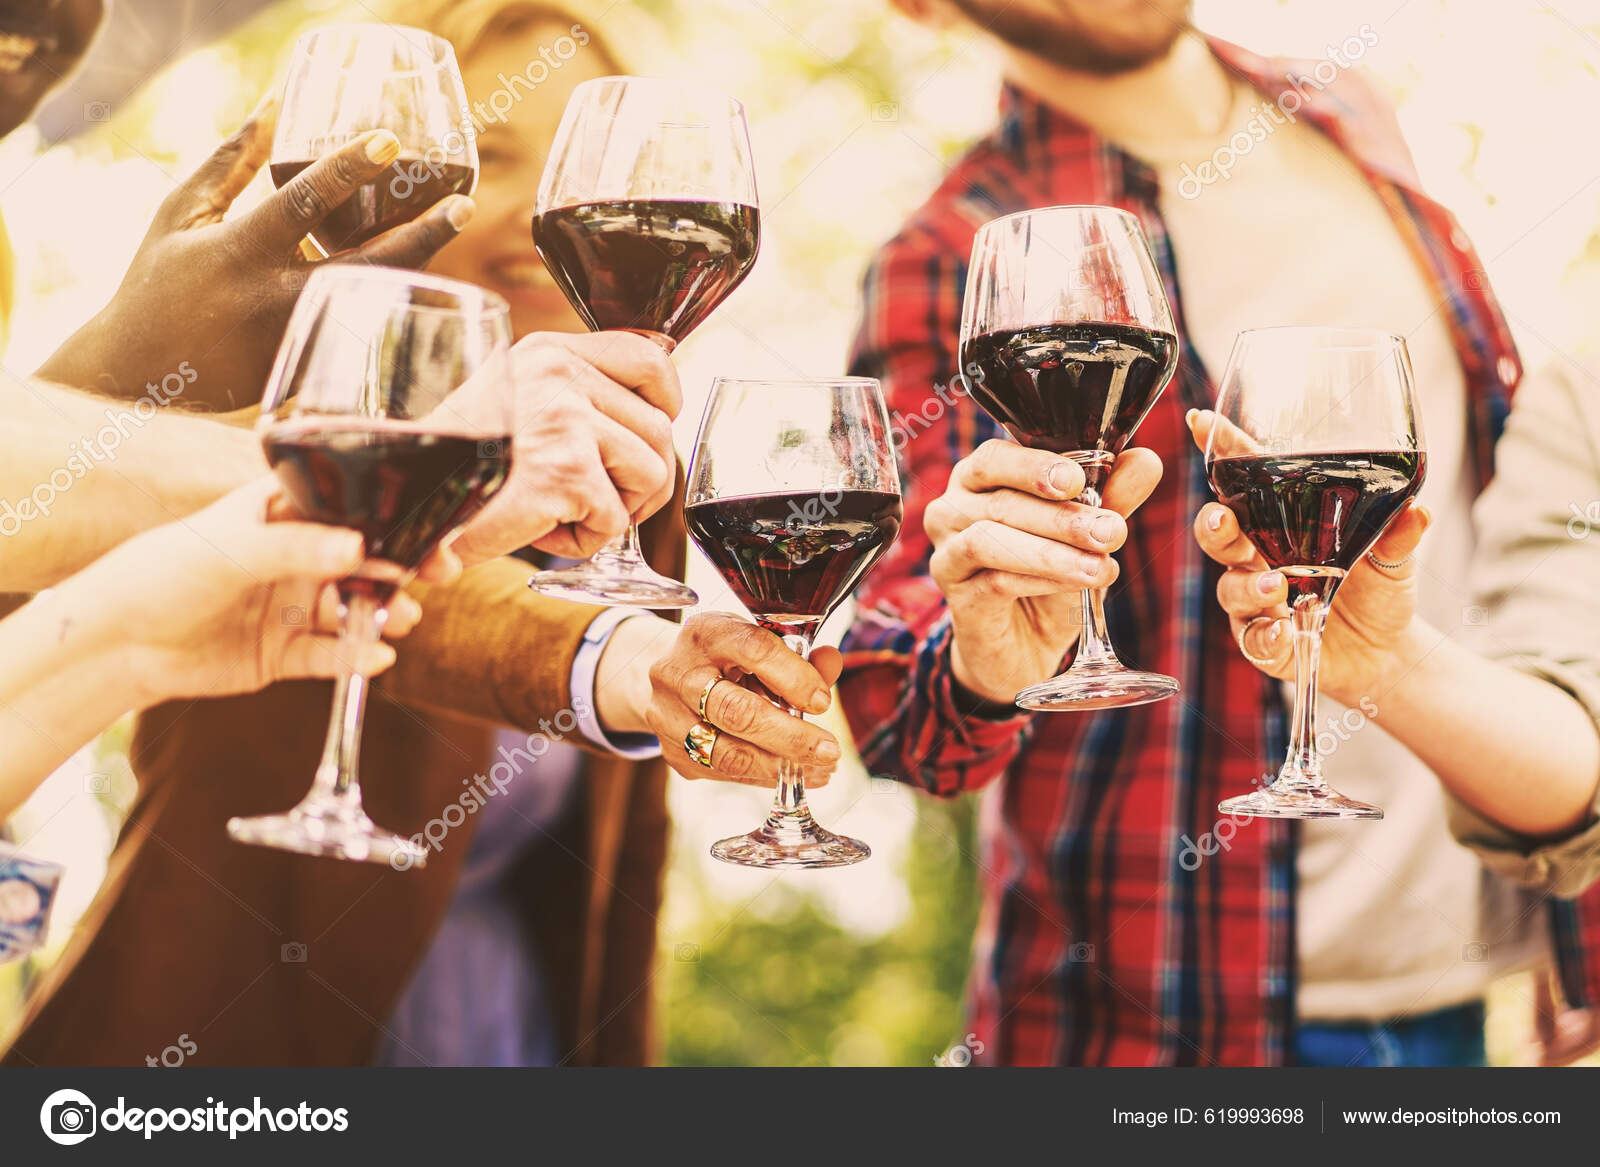 https://st5.depositphotos.com/3430693/61999/i/1600/depositphotos_619993698-stock-photo-best-friends-raising-wine-glasses.jpg